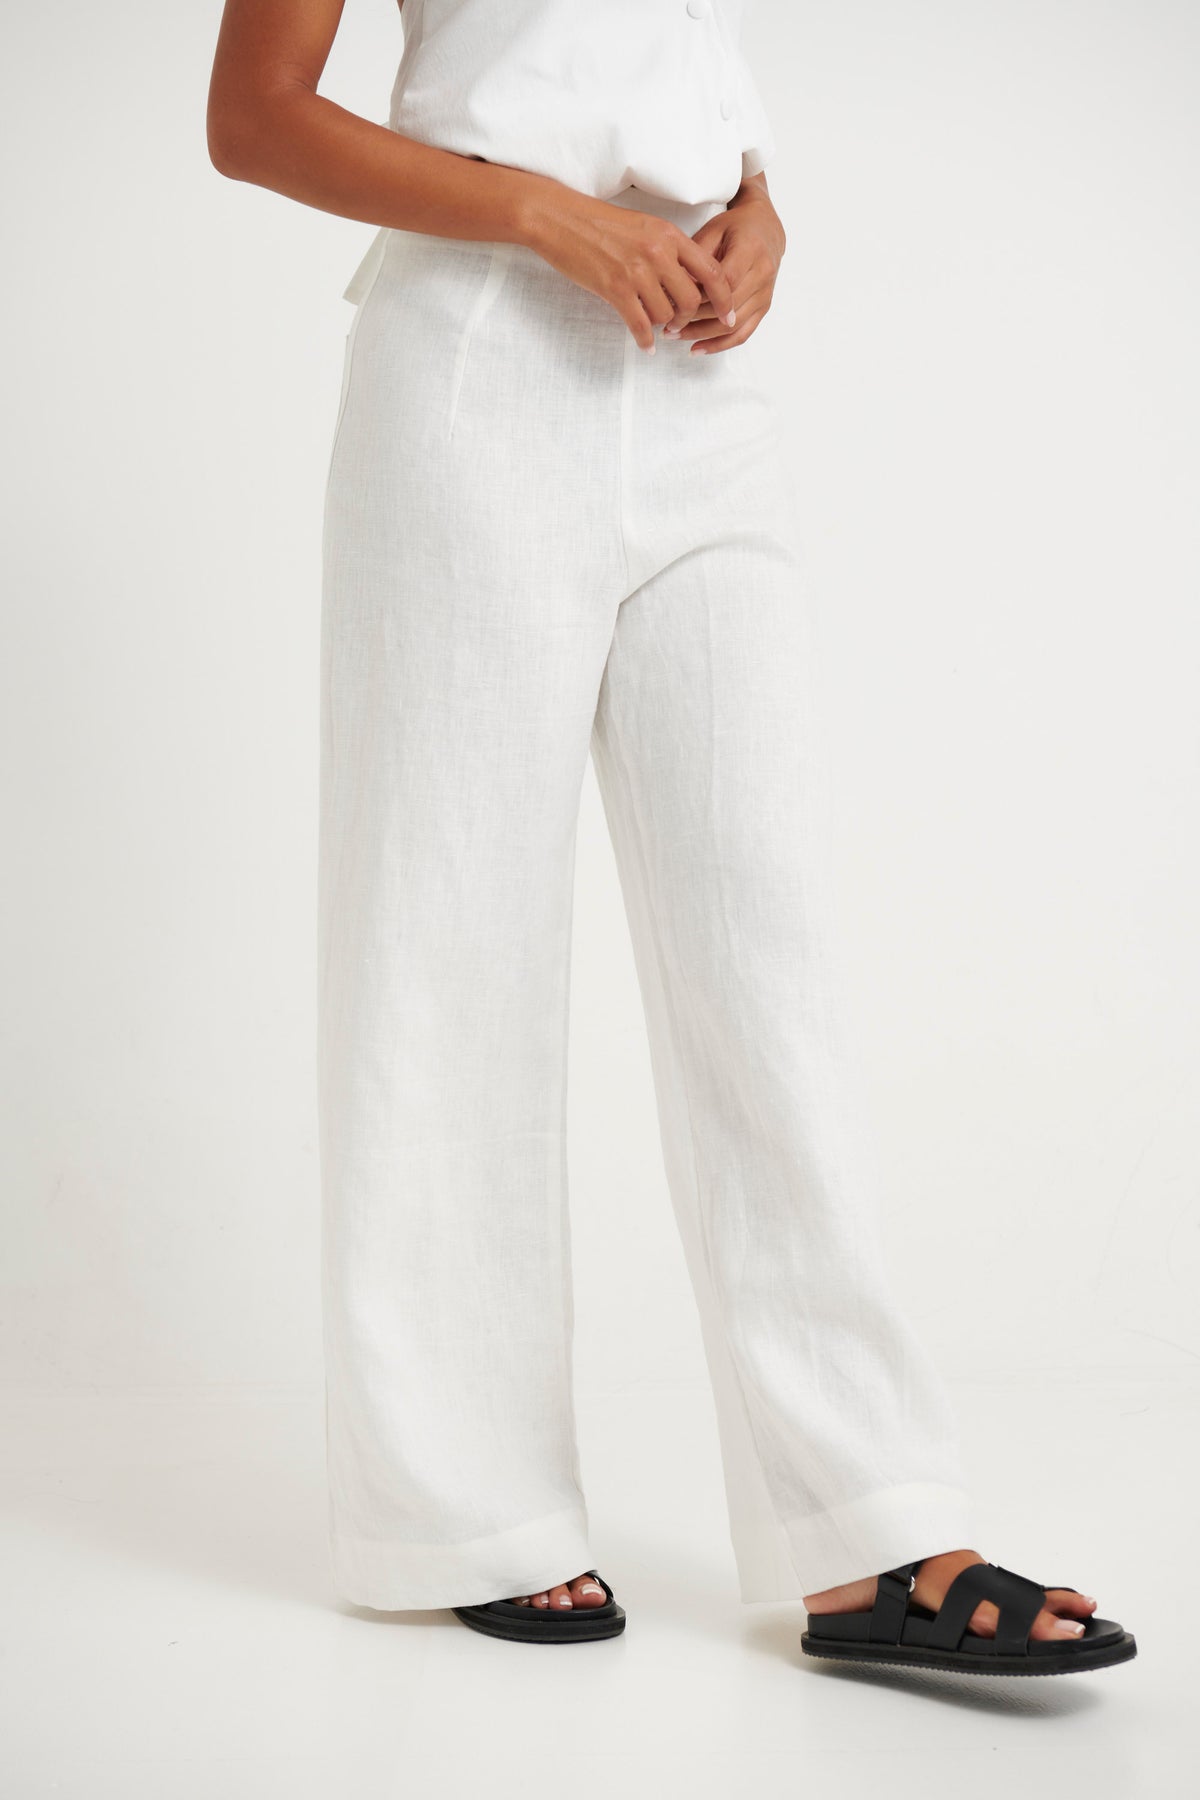 Wrenley Linen Pant White - FINAL SALE